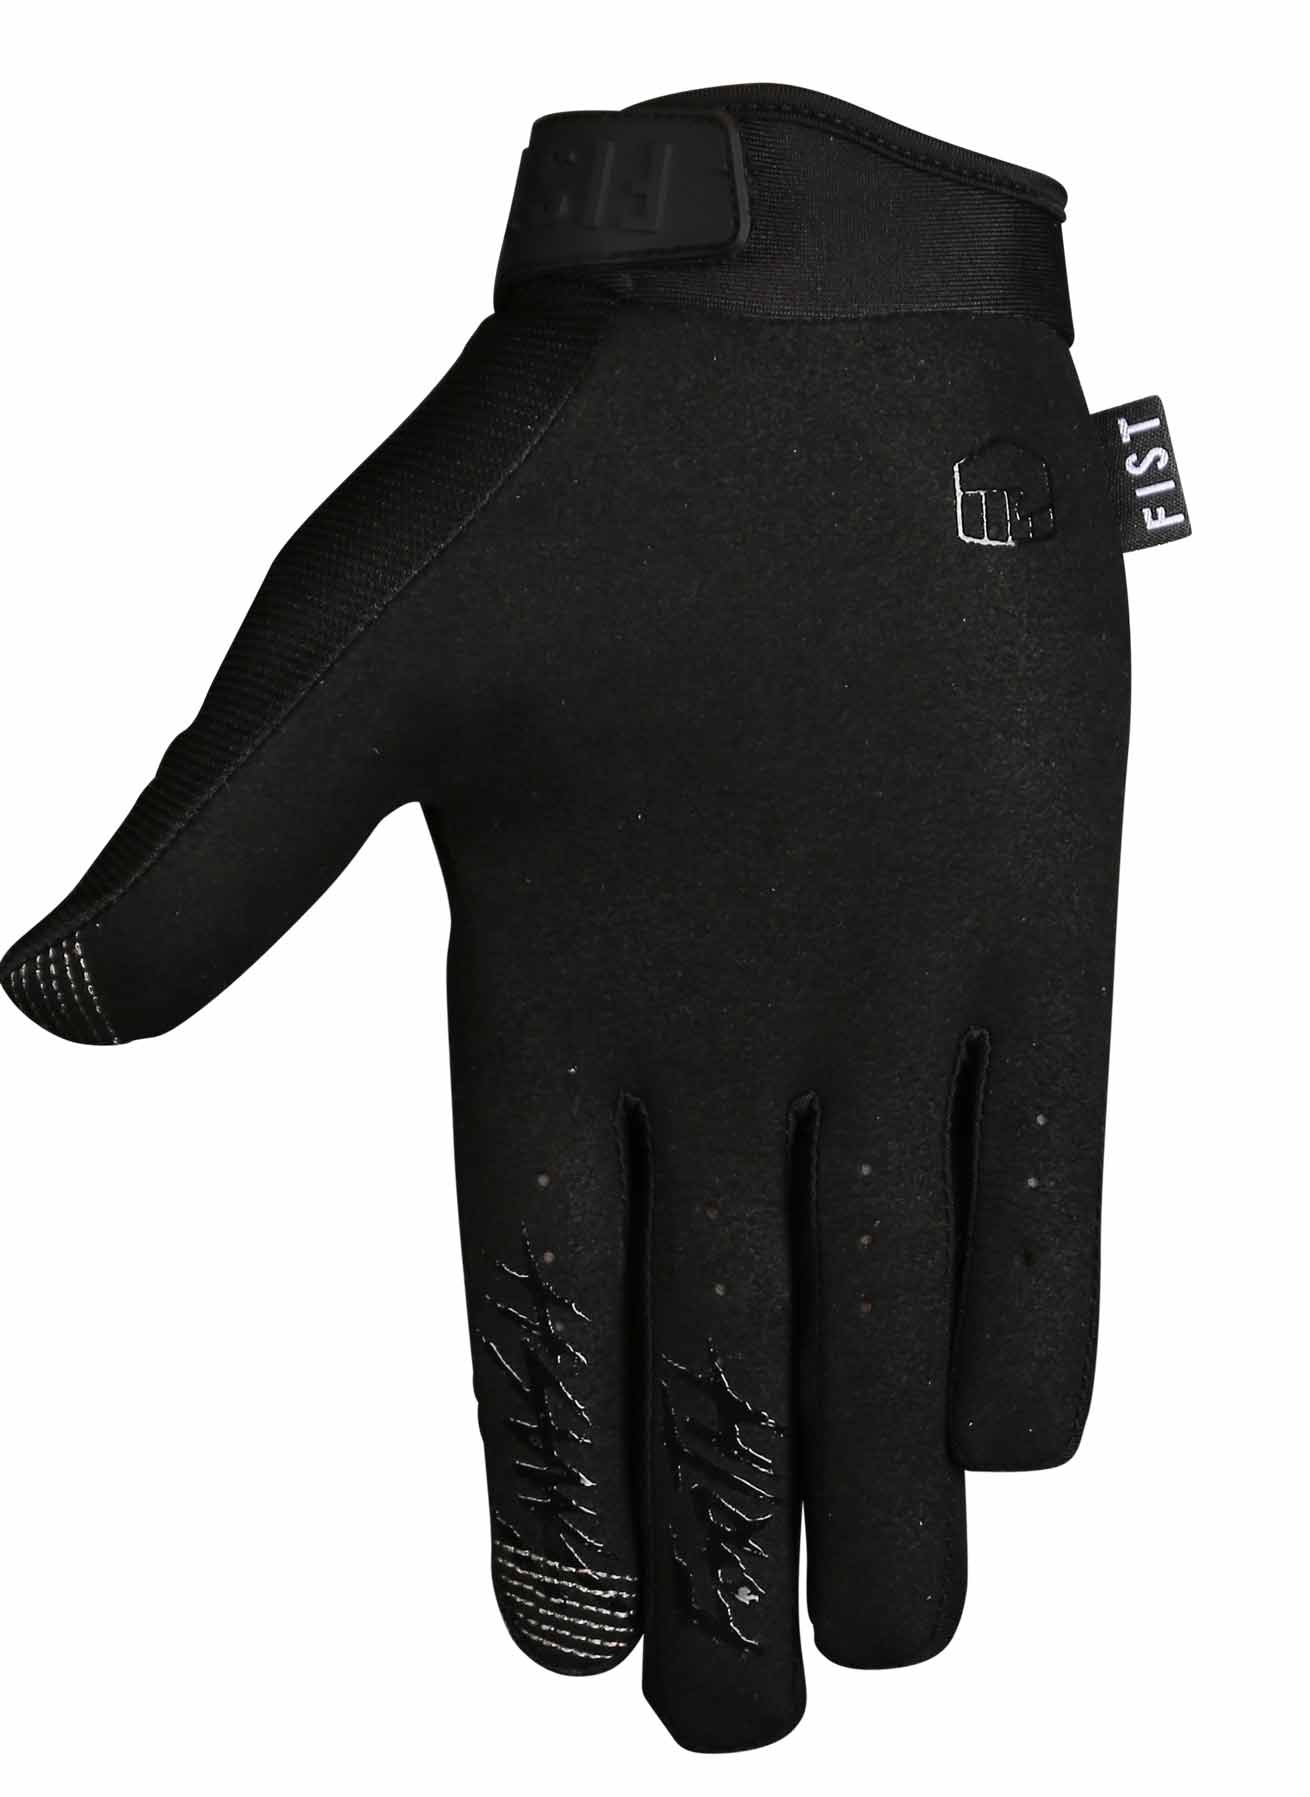 Fist Stocker Youth Glove - Black